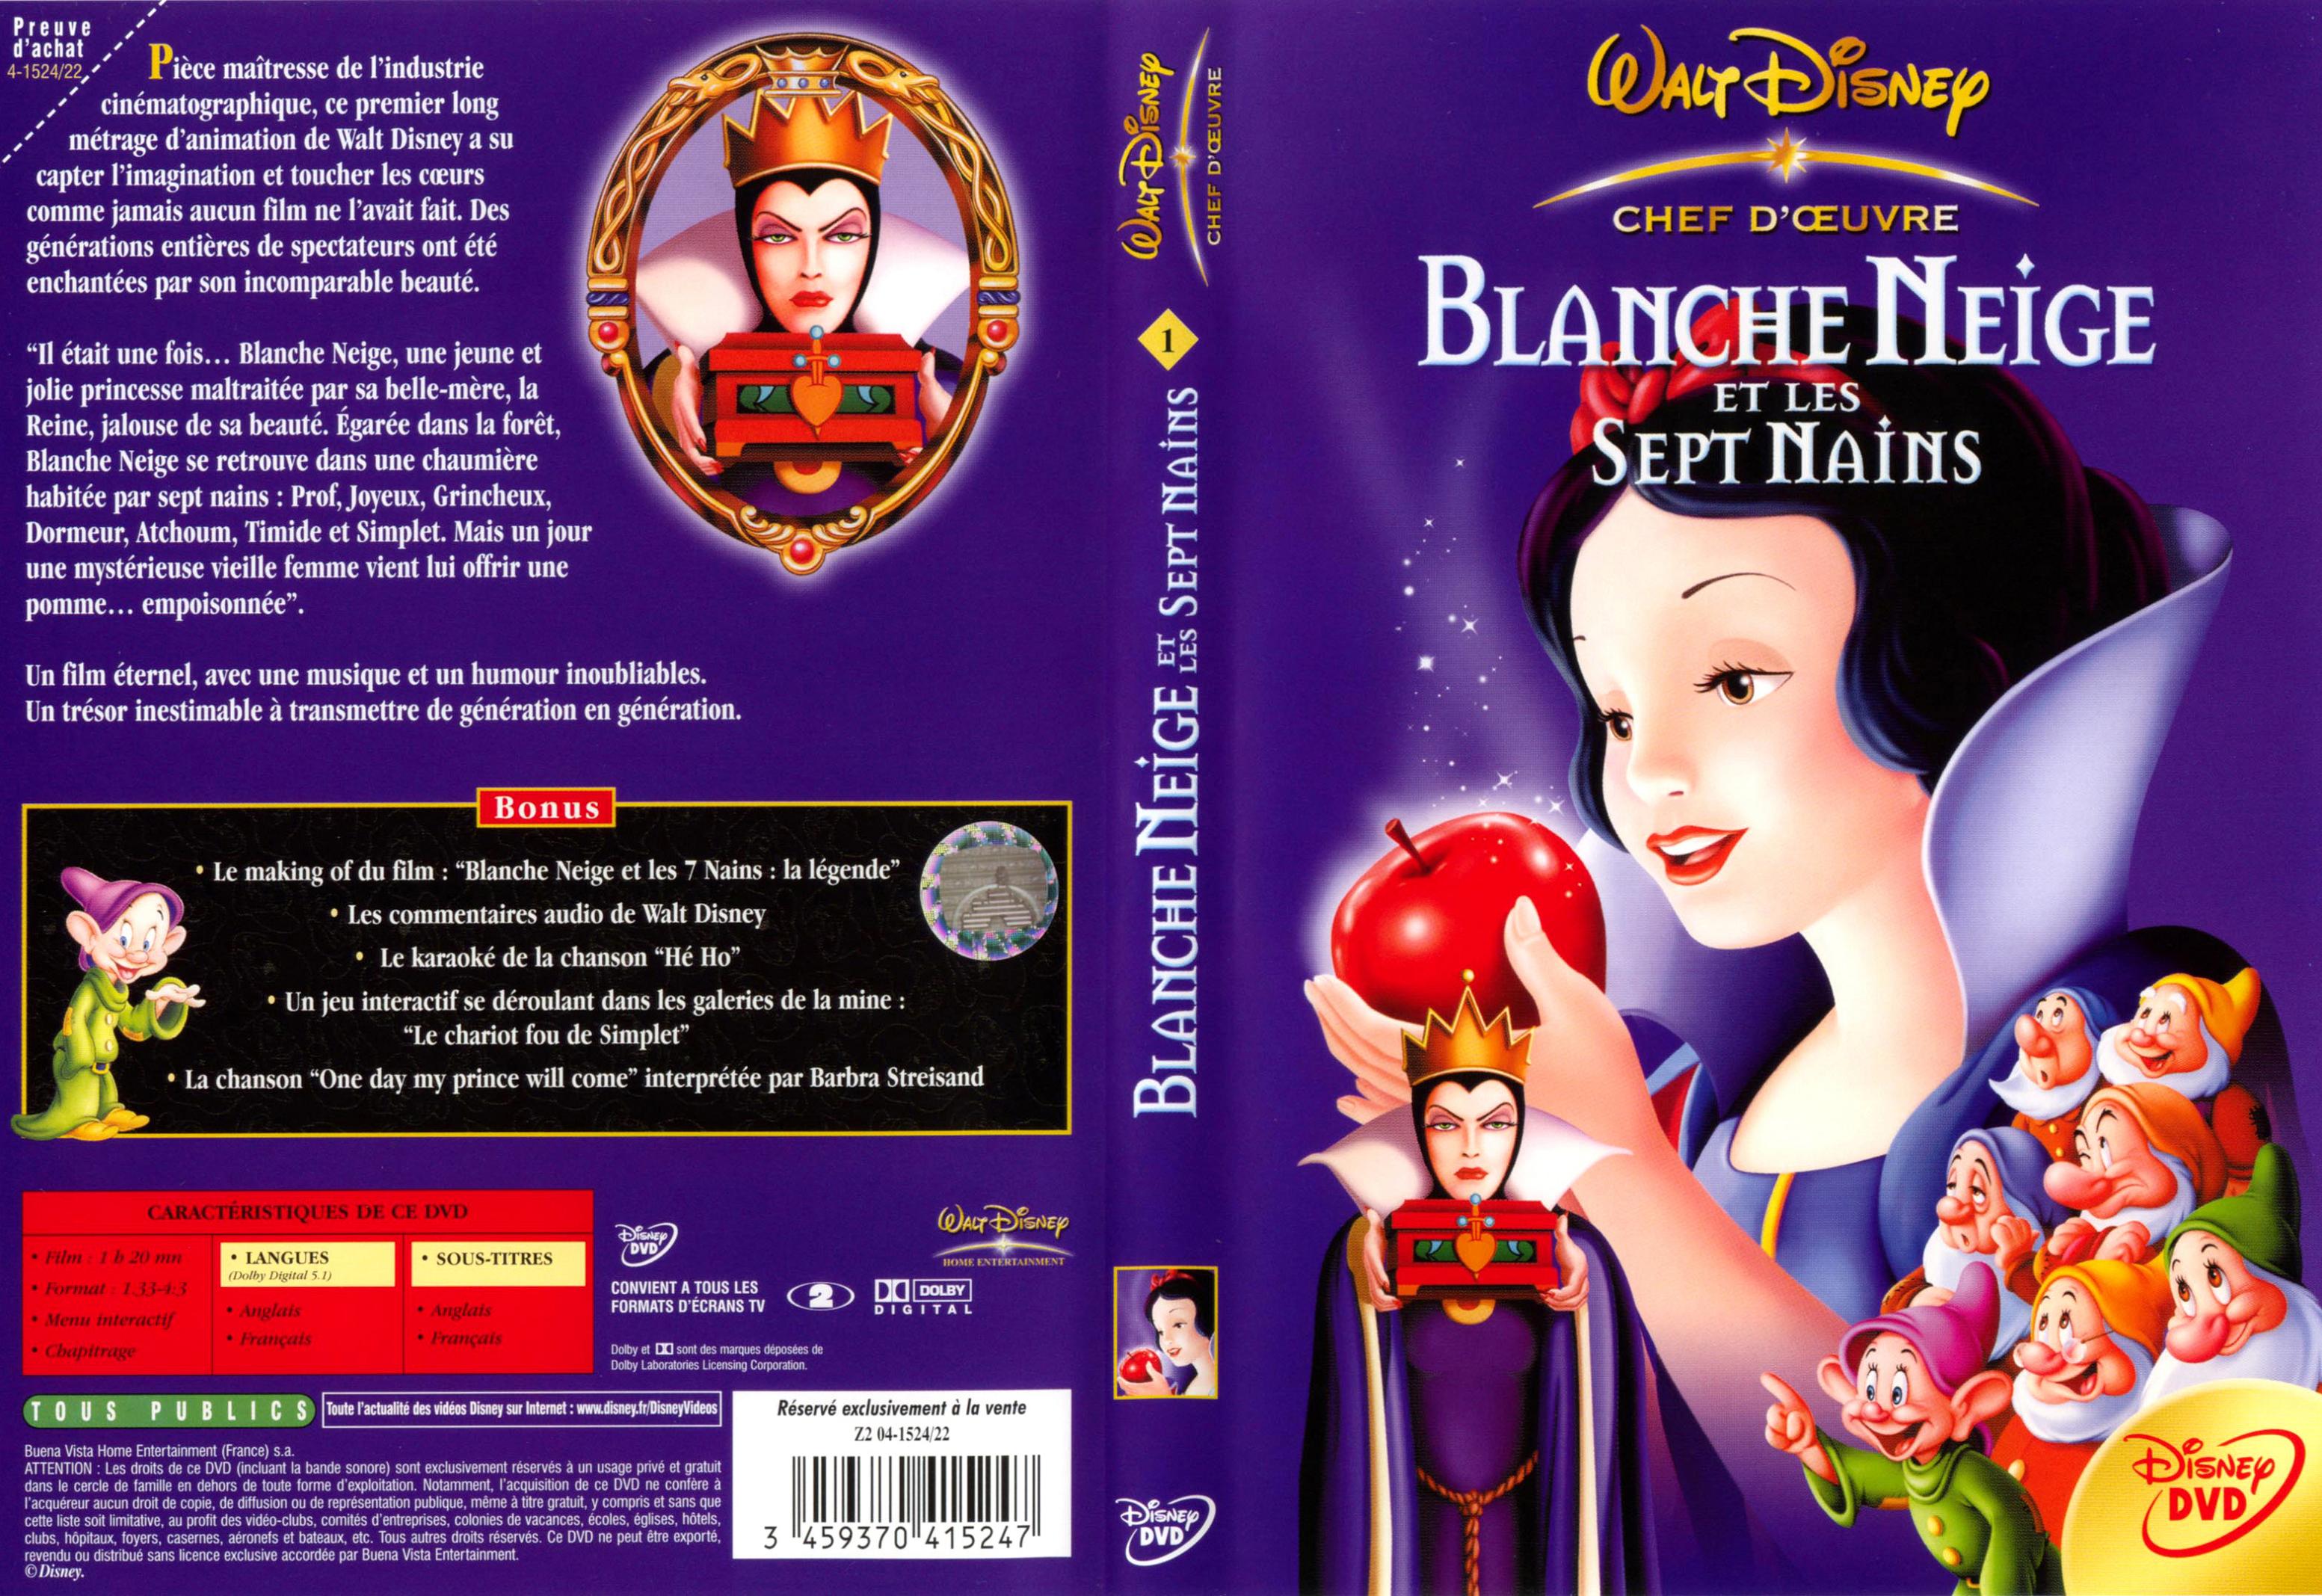 Jaquette DVD Blanche Neige et les sept nains v2